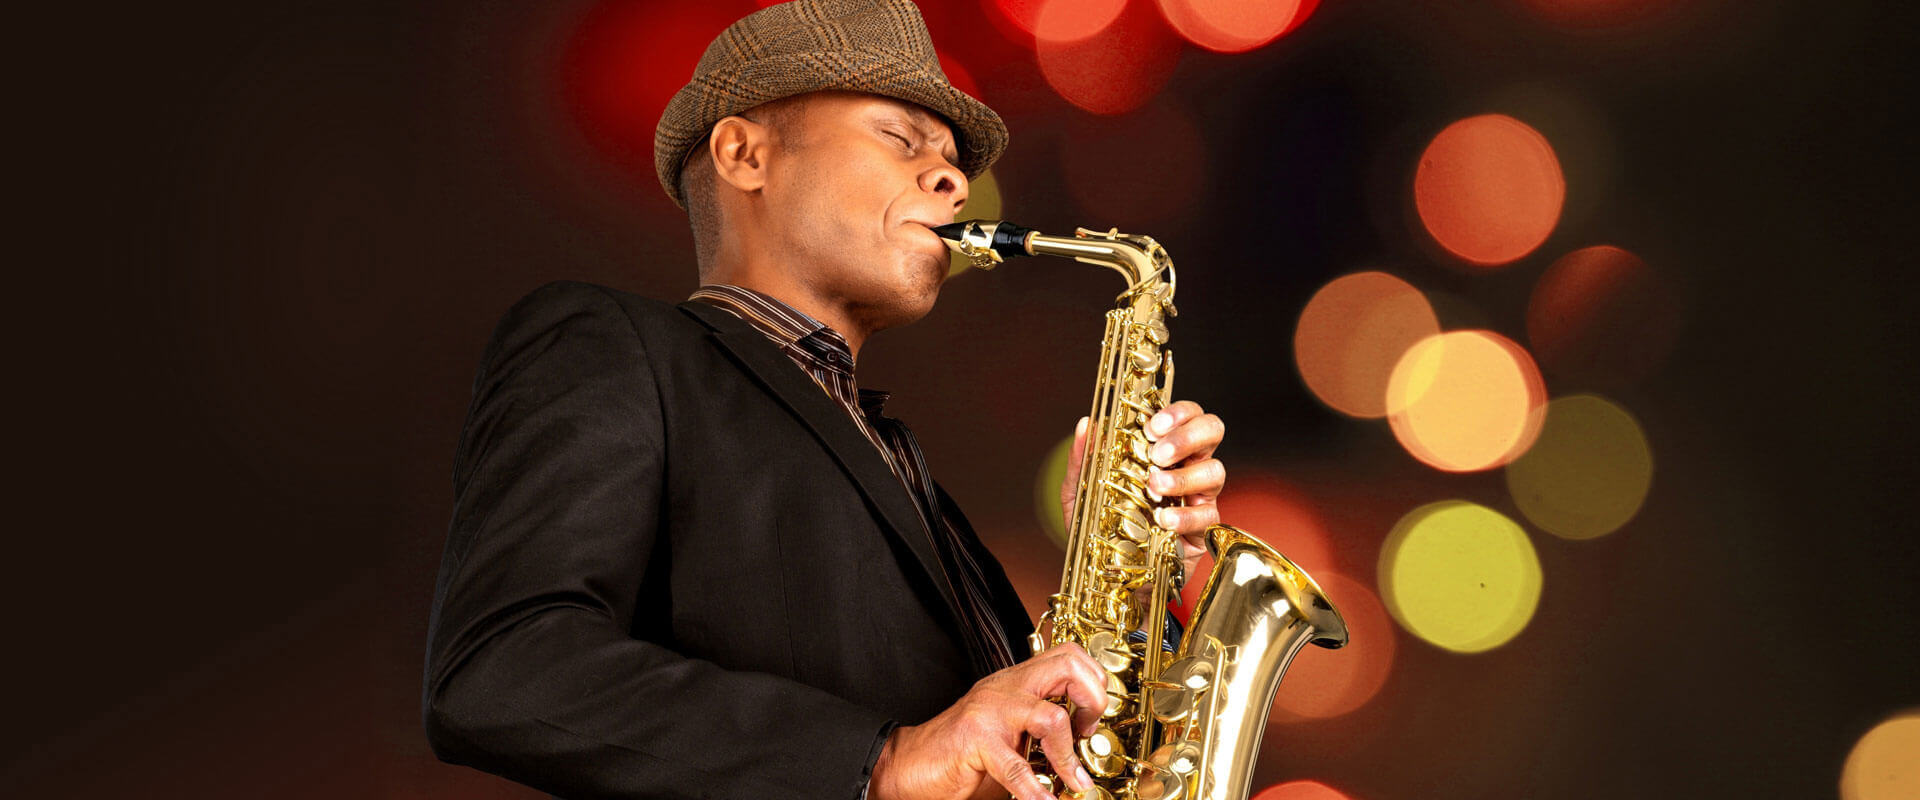 Saxophone Lessons Adamsburg, PA